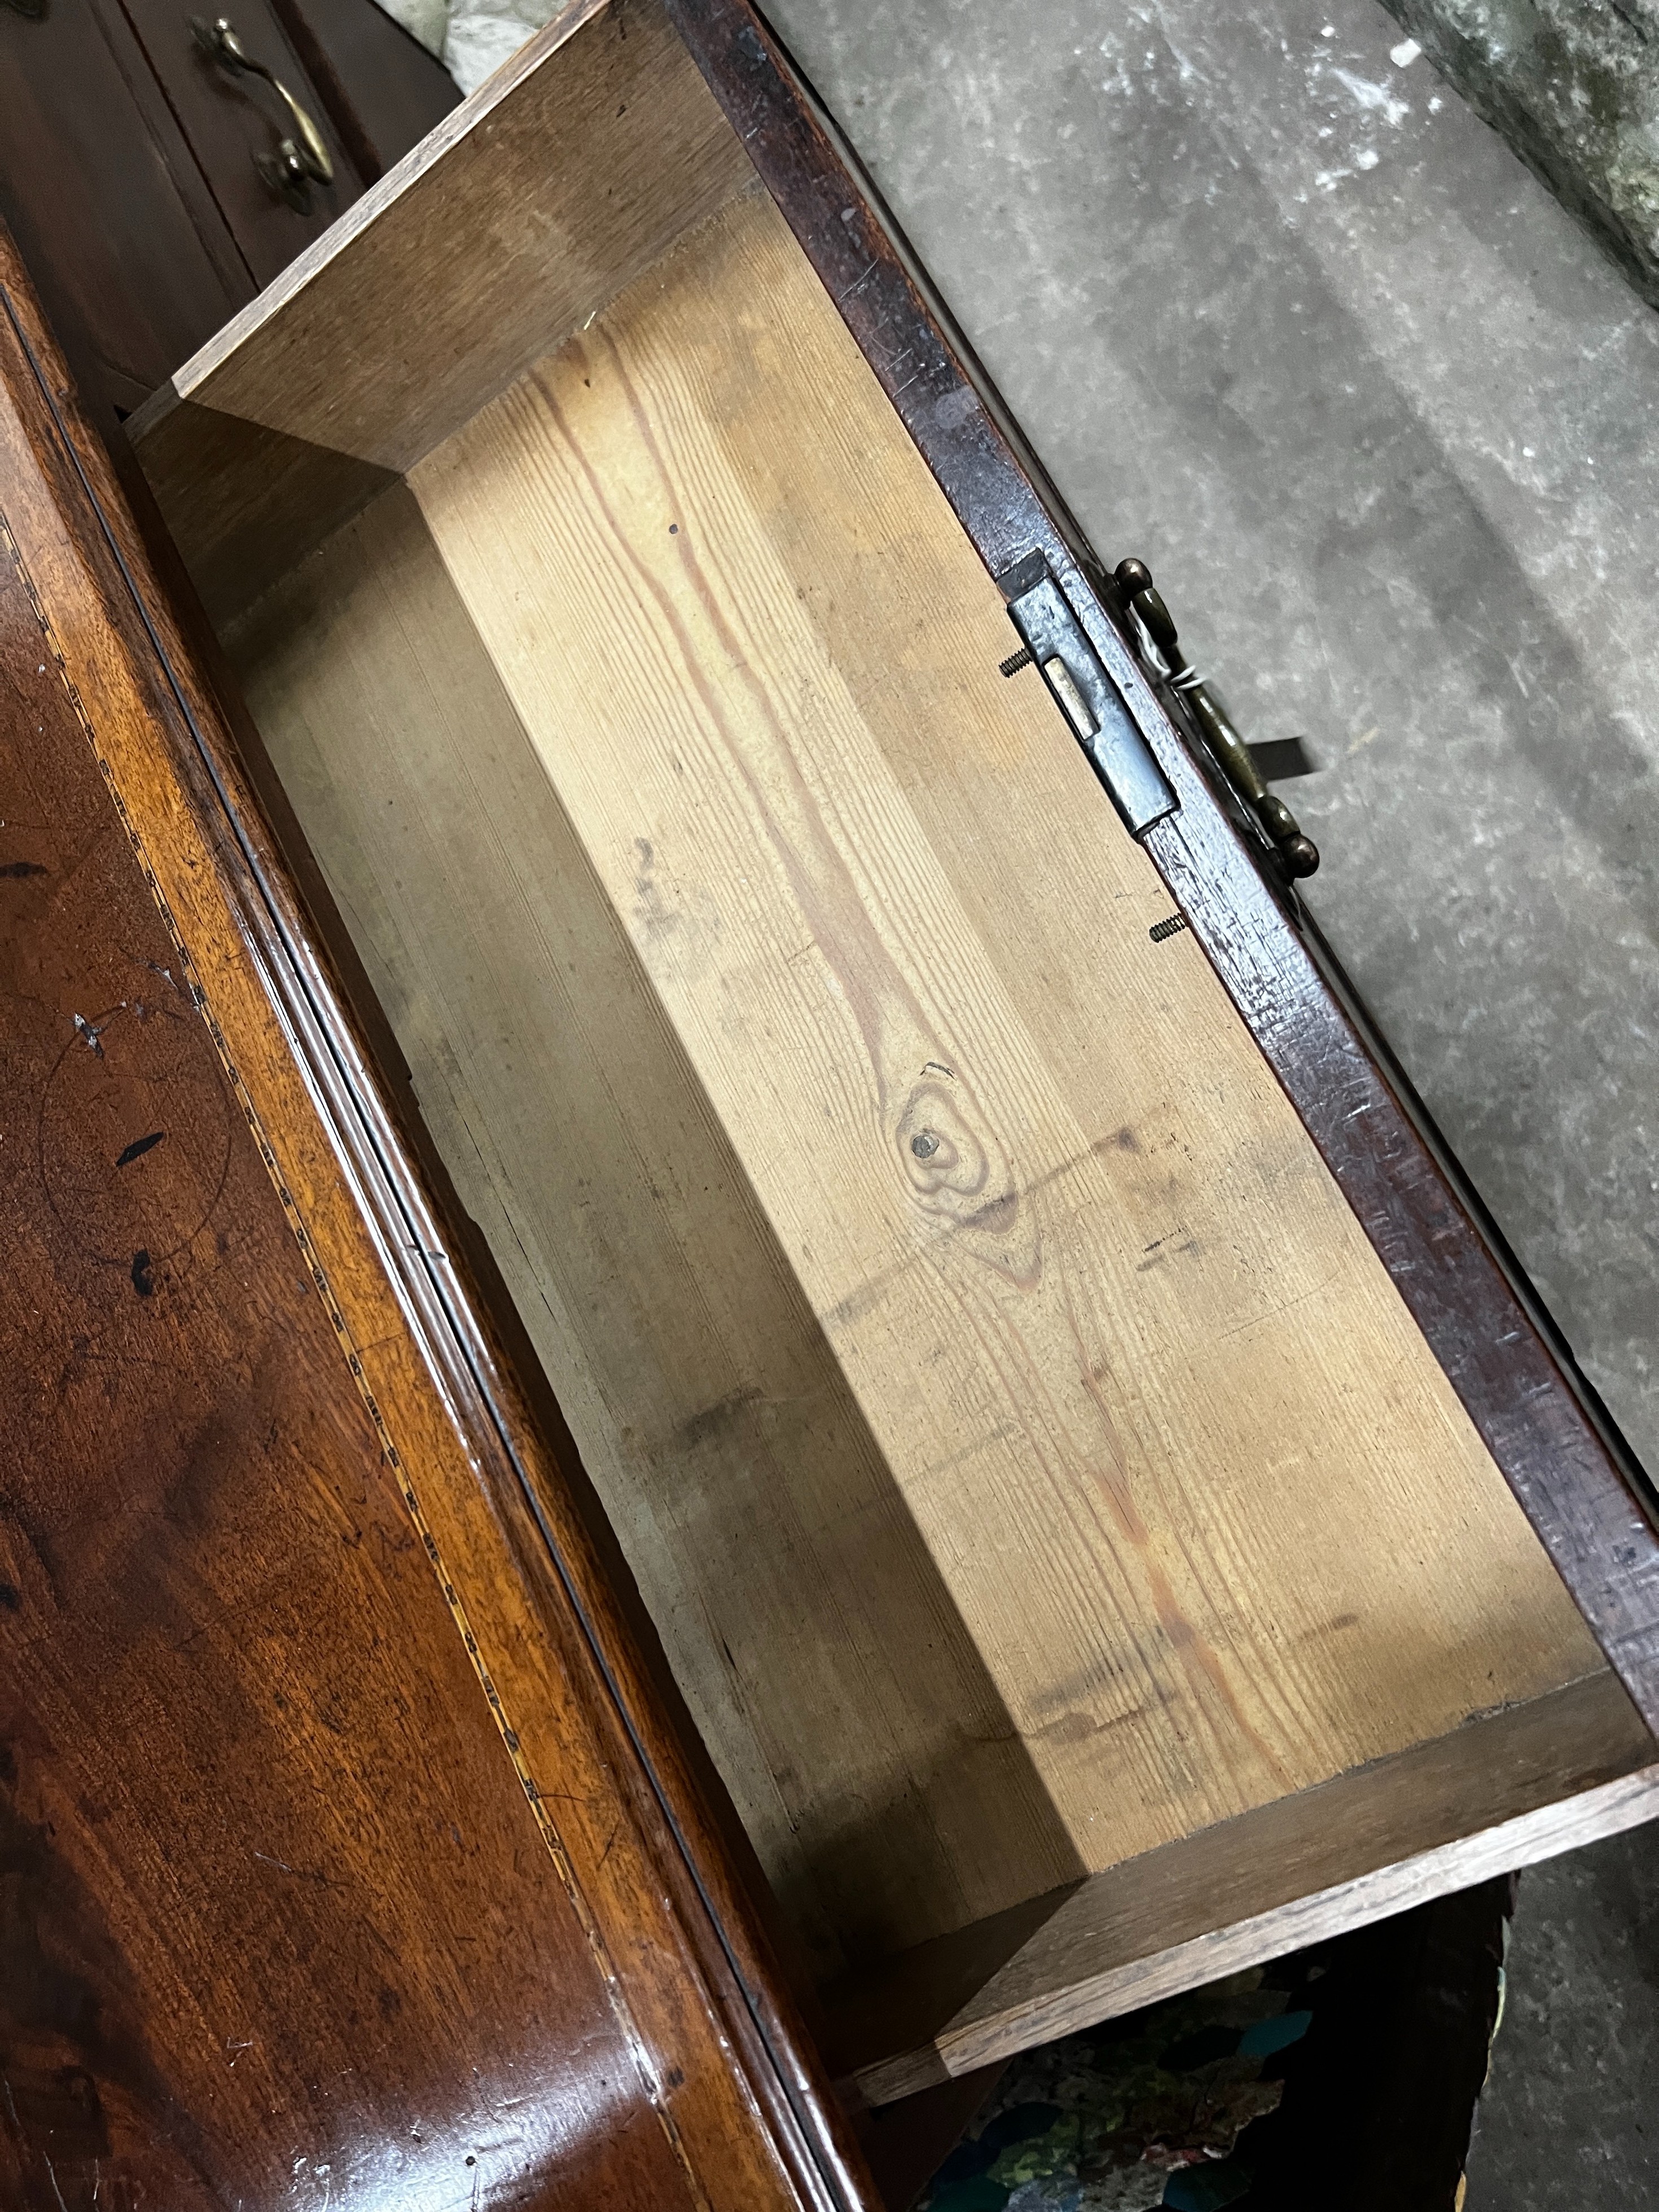 A George III inlaid mahogany chest, width 113cm, depth 55cm, height 98cm